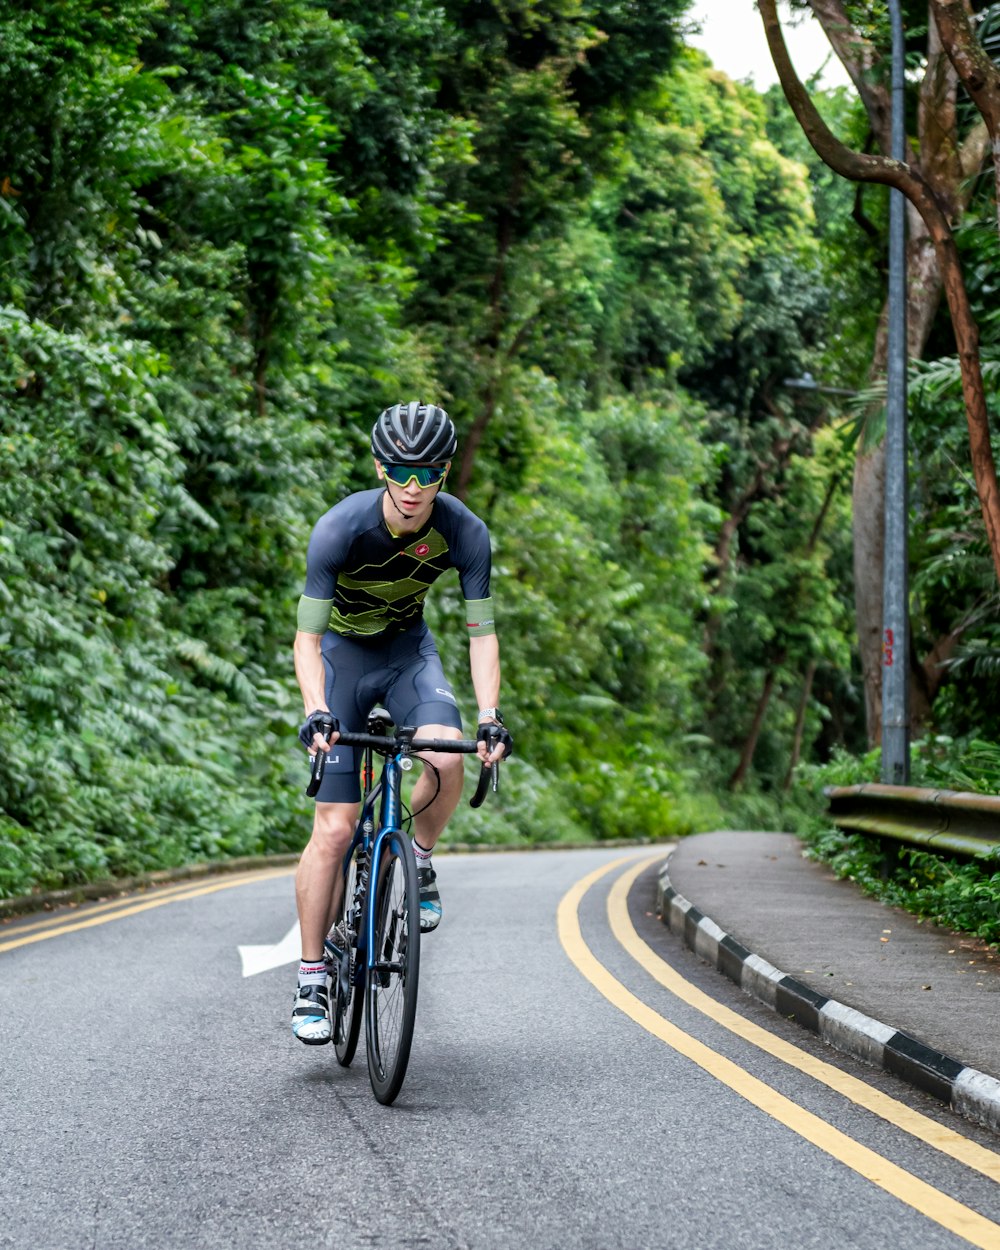 man in black shirt riding on bicycle on road during daytime